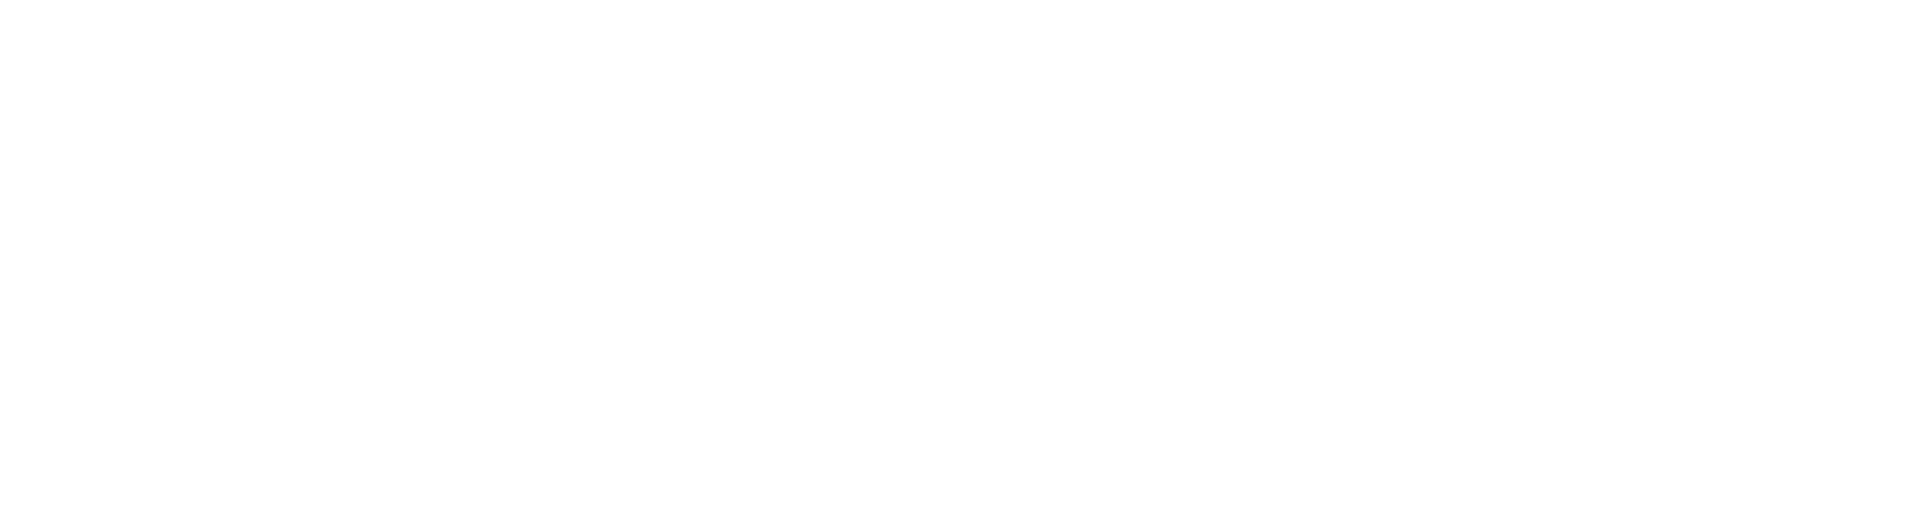 The Mitsubishi Eclipse Cross logo